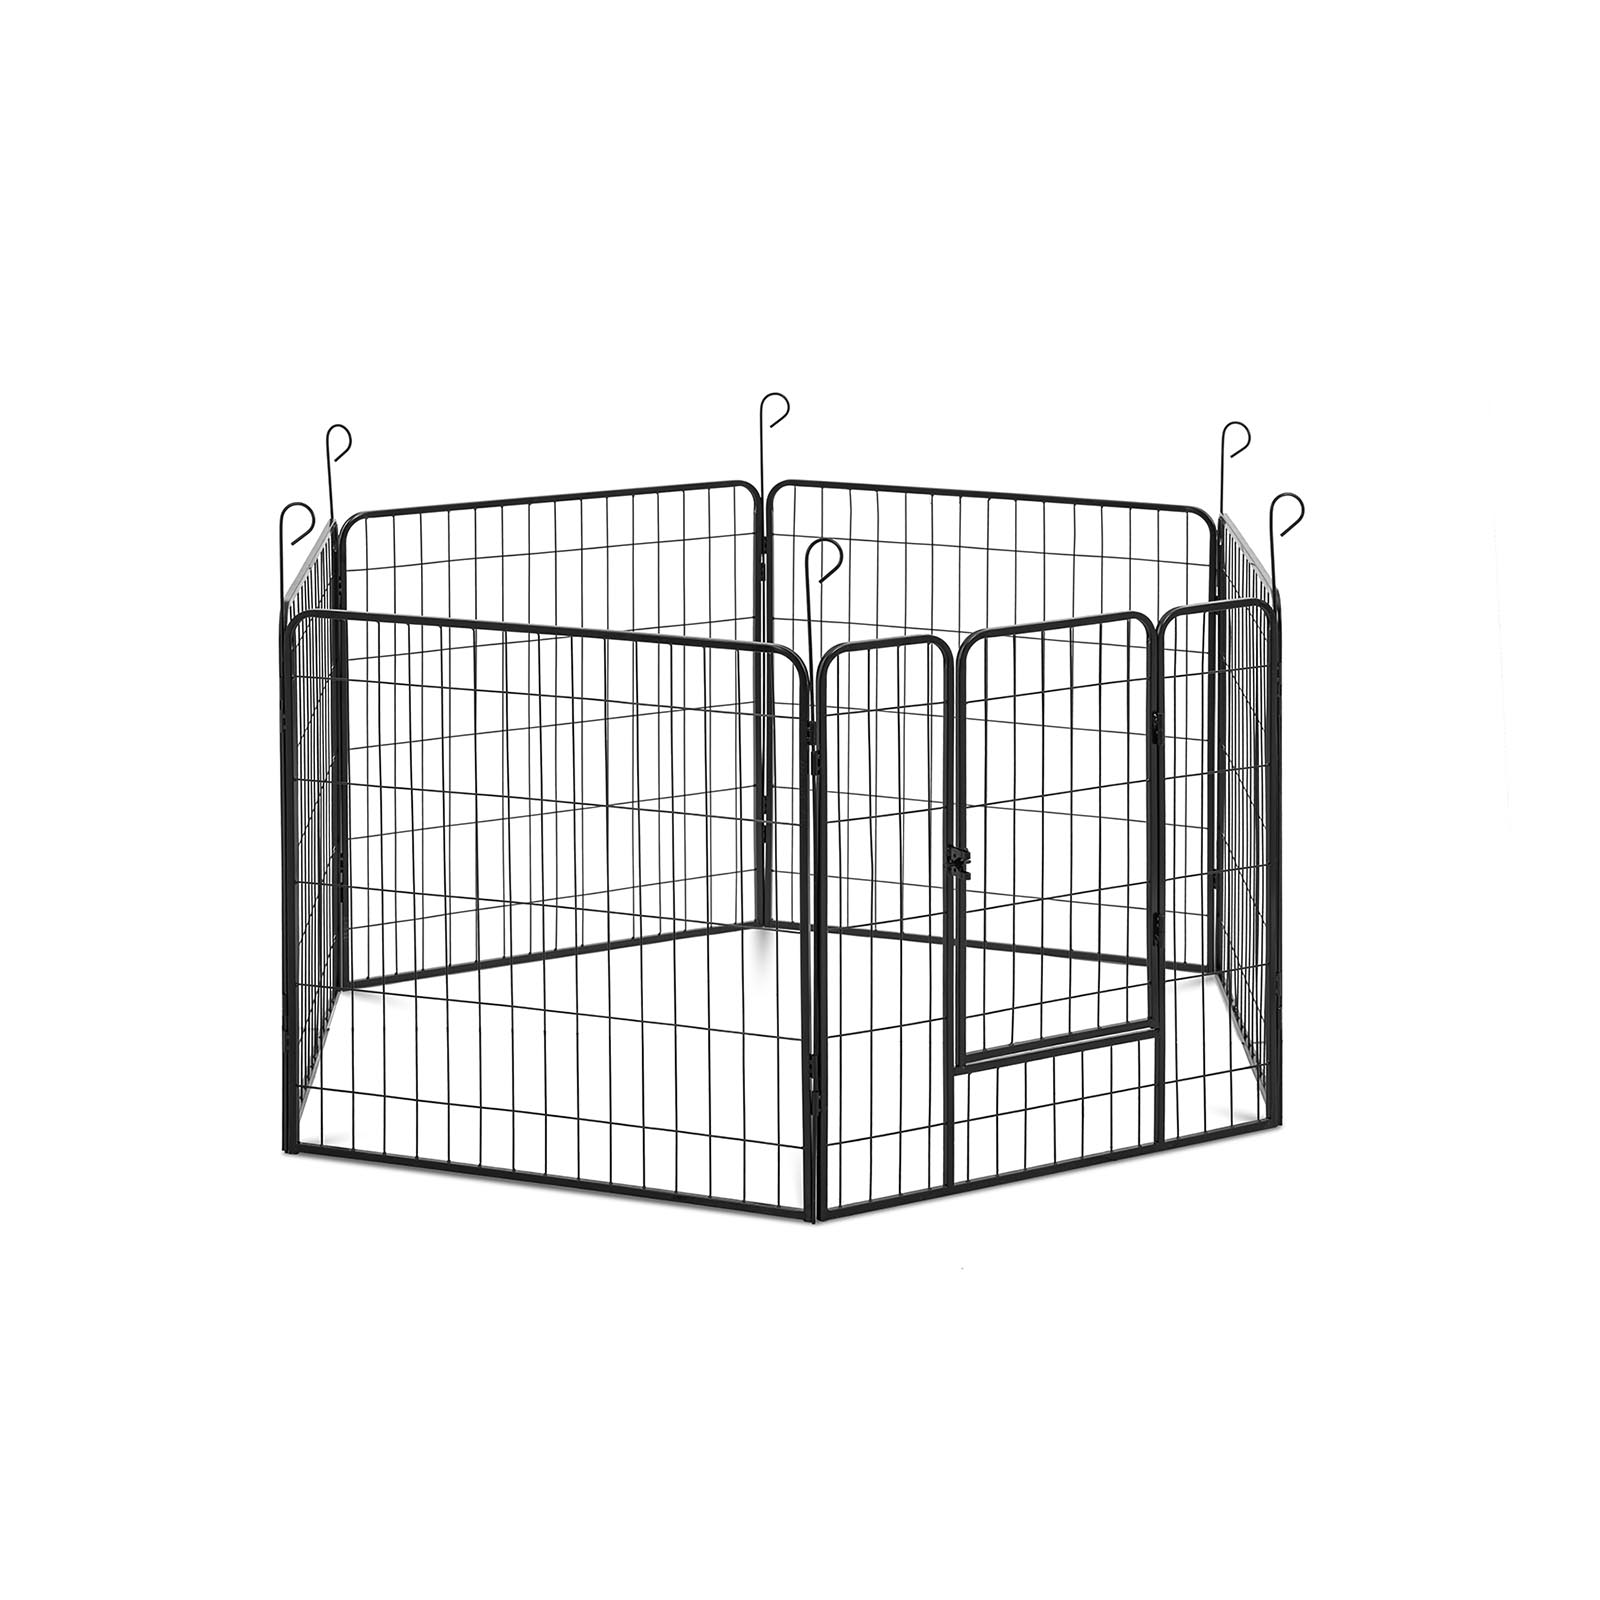 Puppy run - s vratima - 6 modularni segmenti - za zatvorene i otvorene prostore